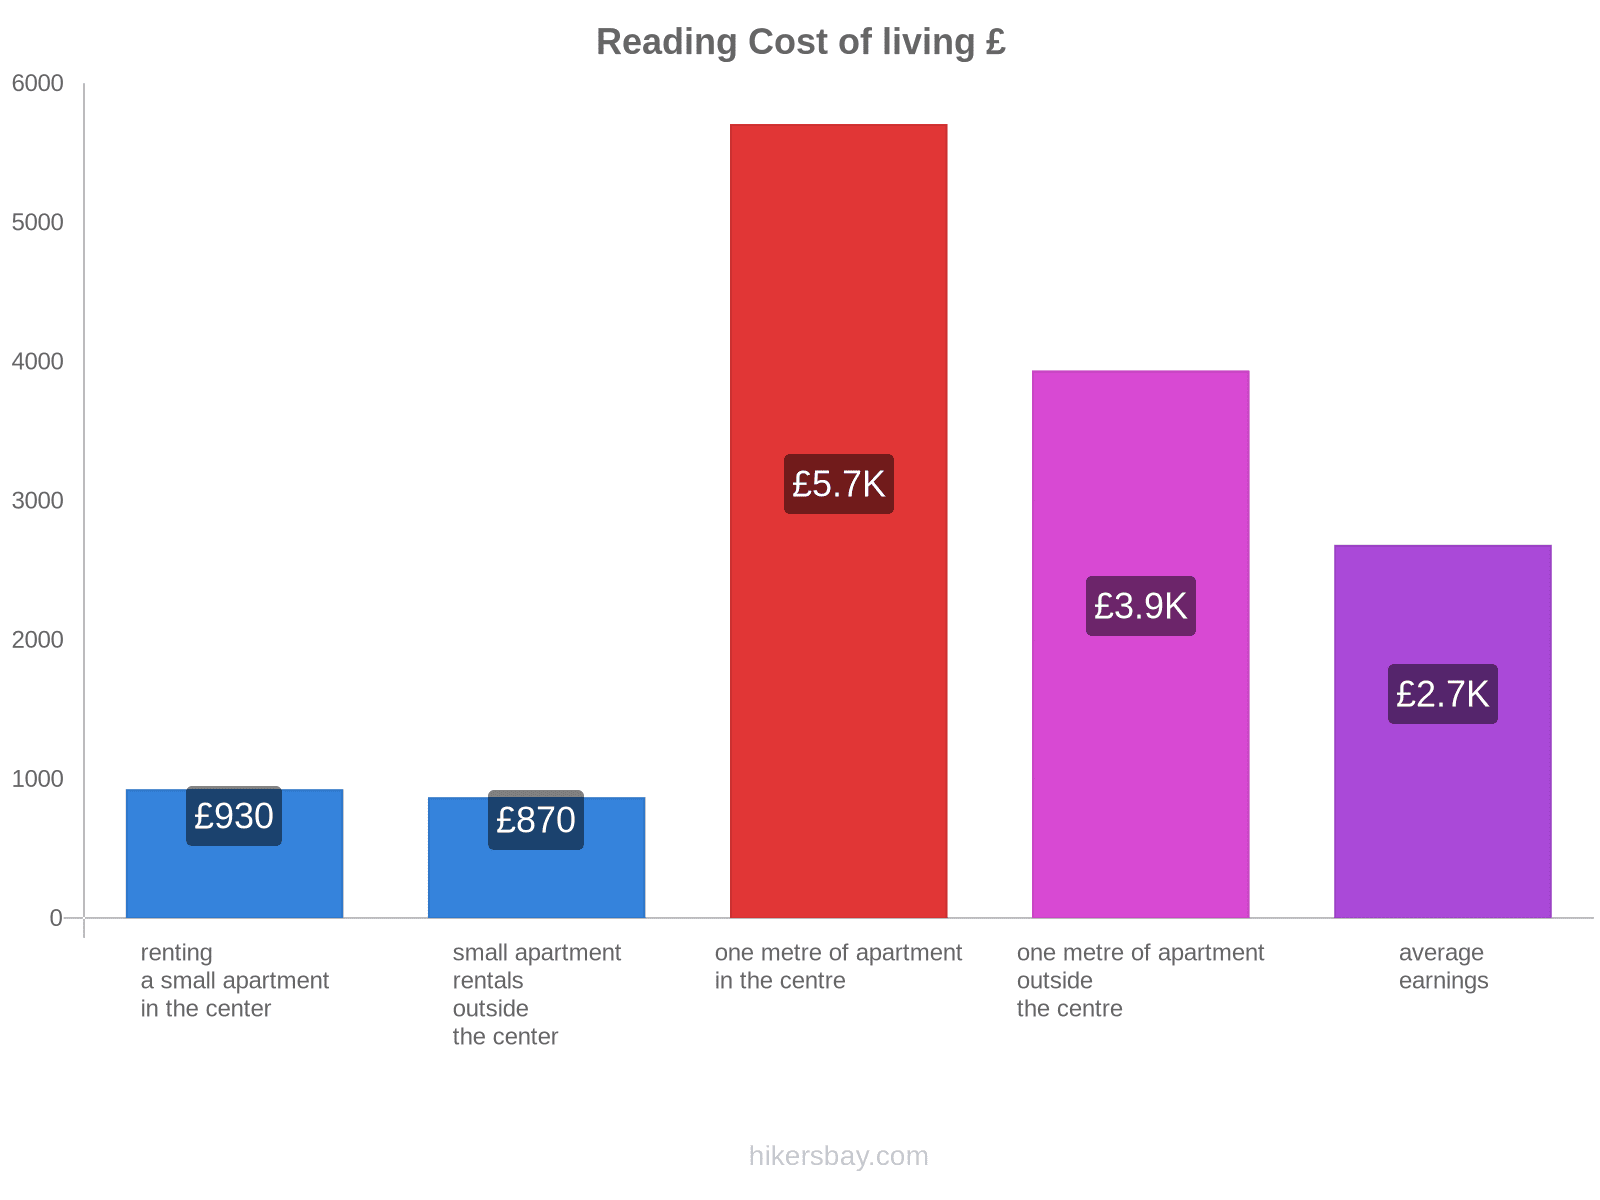 Reading cost of living hikersbay.com